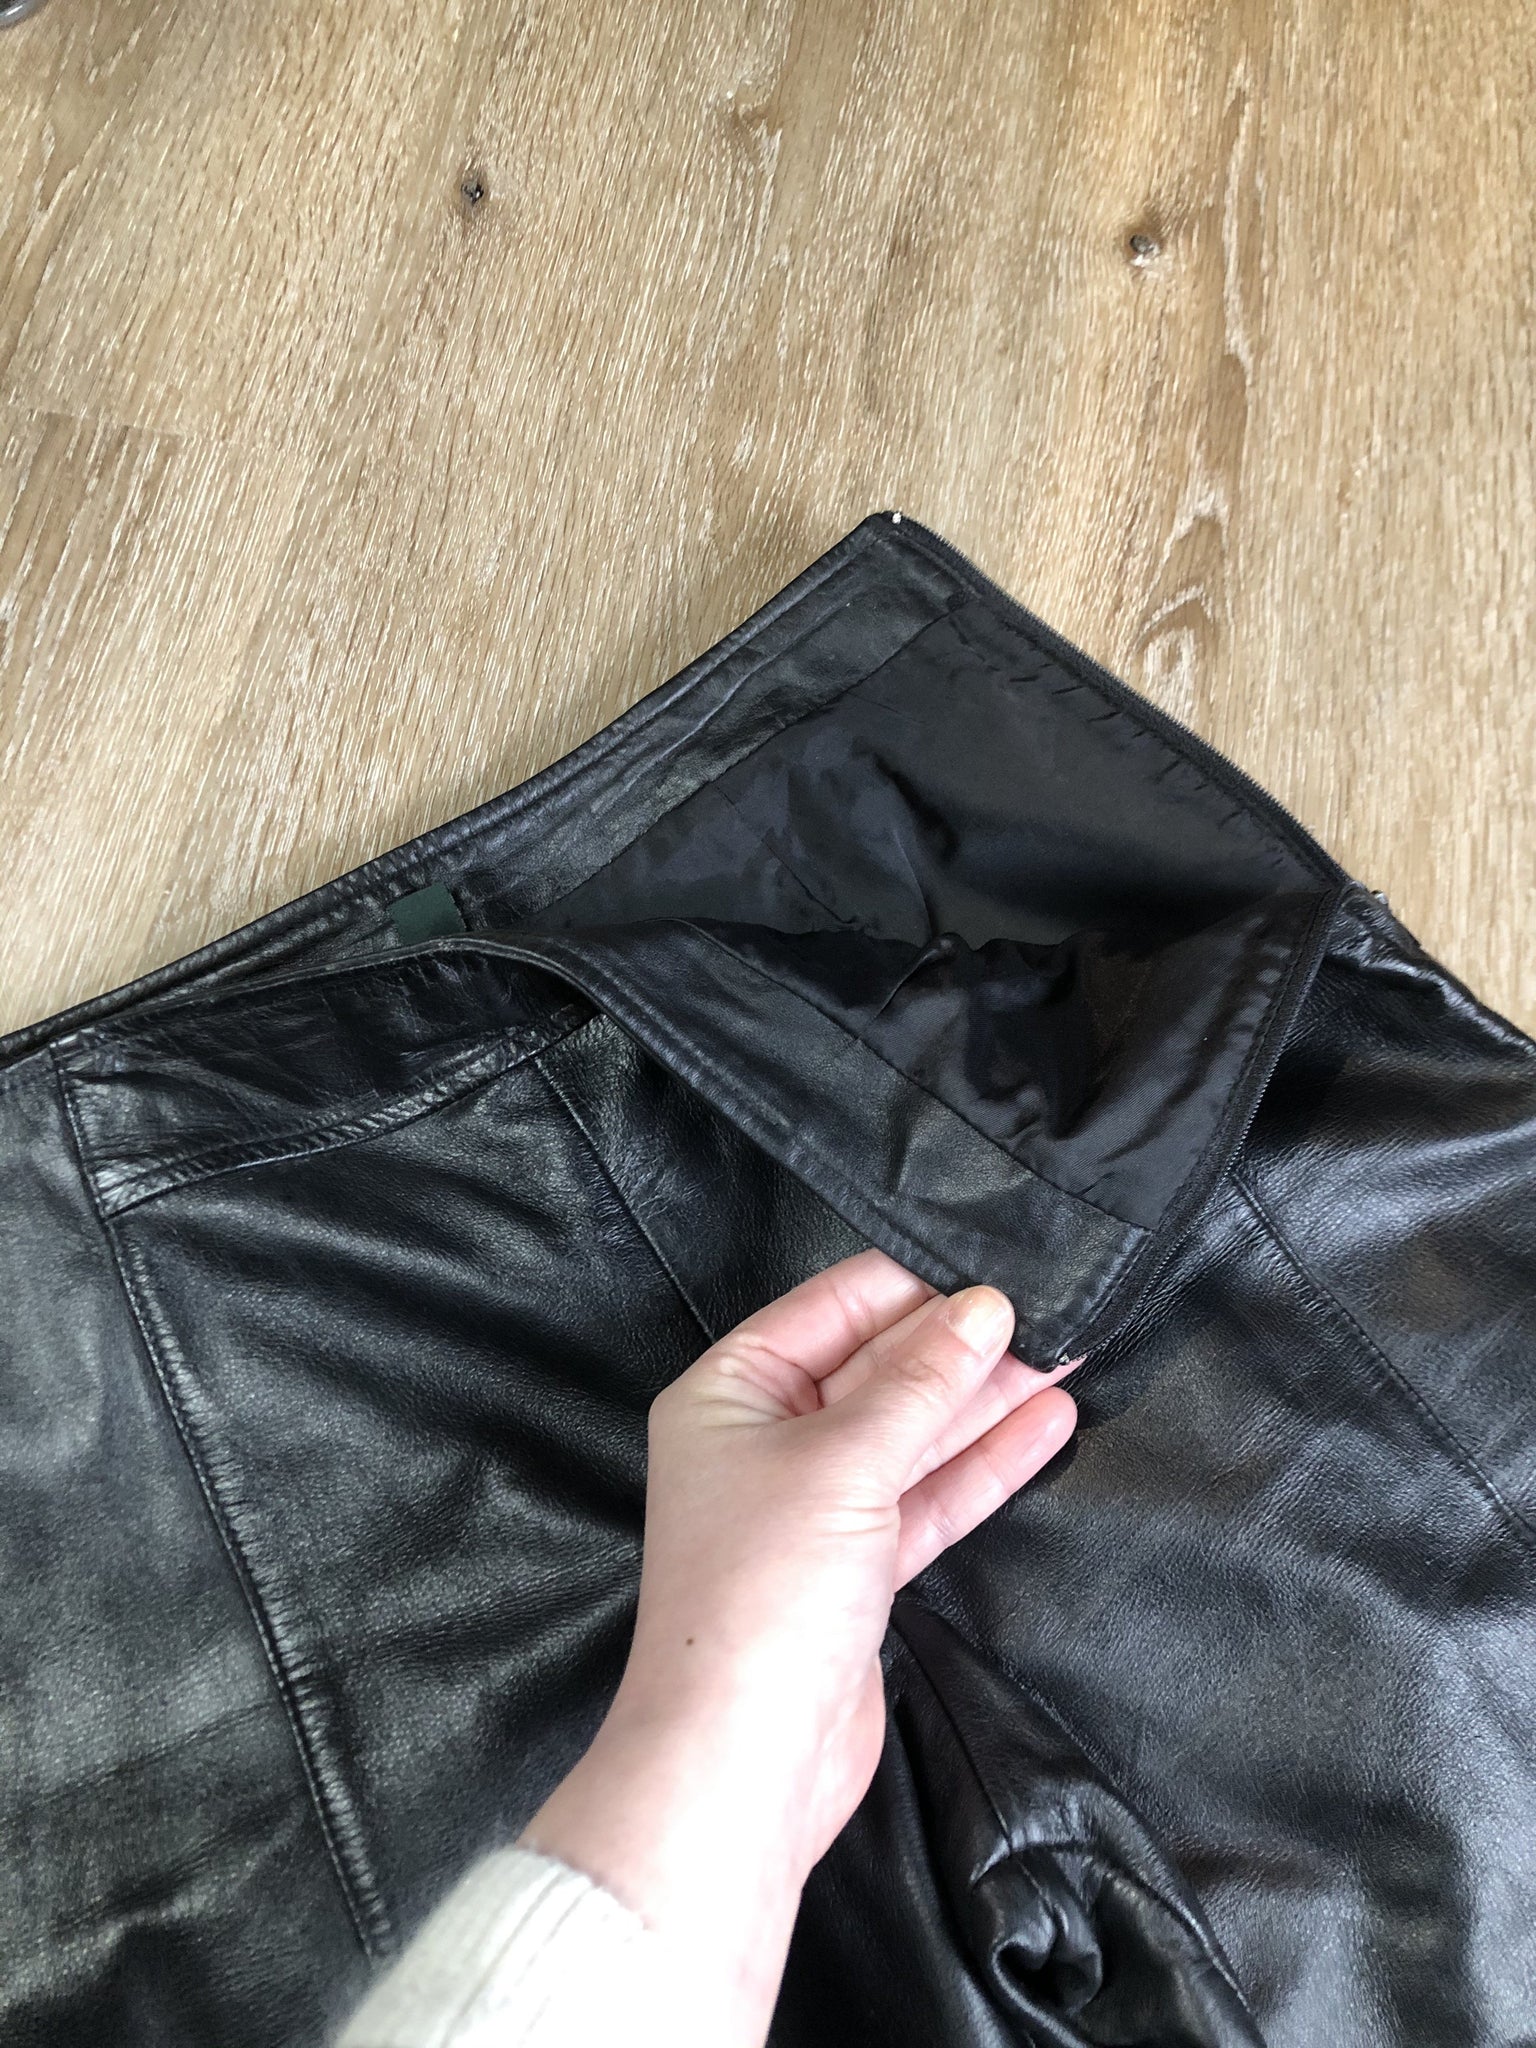 REVOLUTION LEATHER PANTS Men's Leather Pants Black Leather Moto